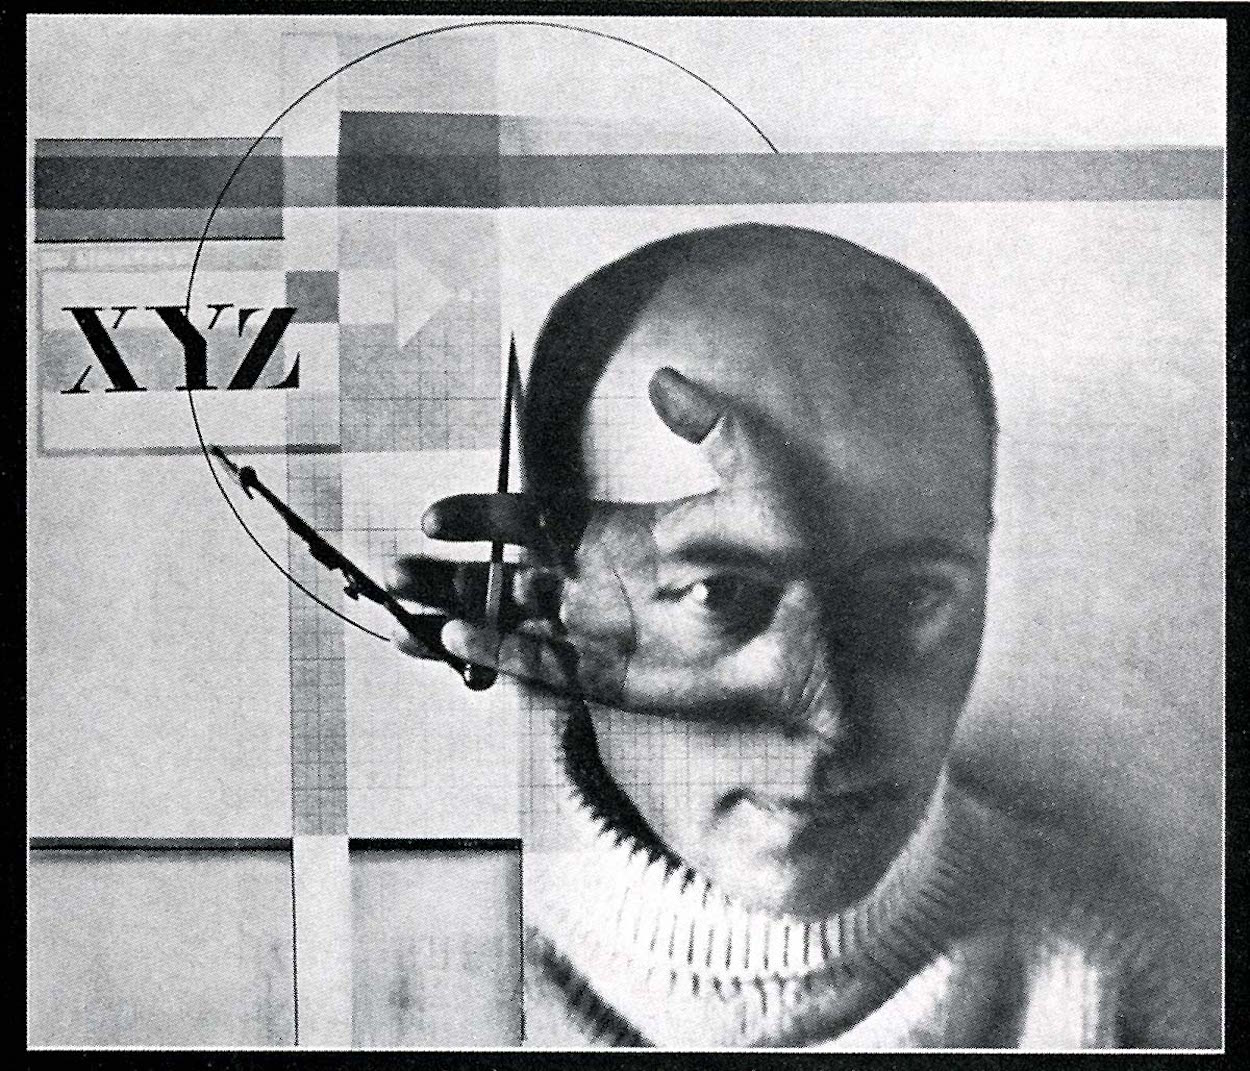 El Lissitzky - 23 Kasım, 1890 - 30 Aralık, 1941